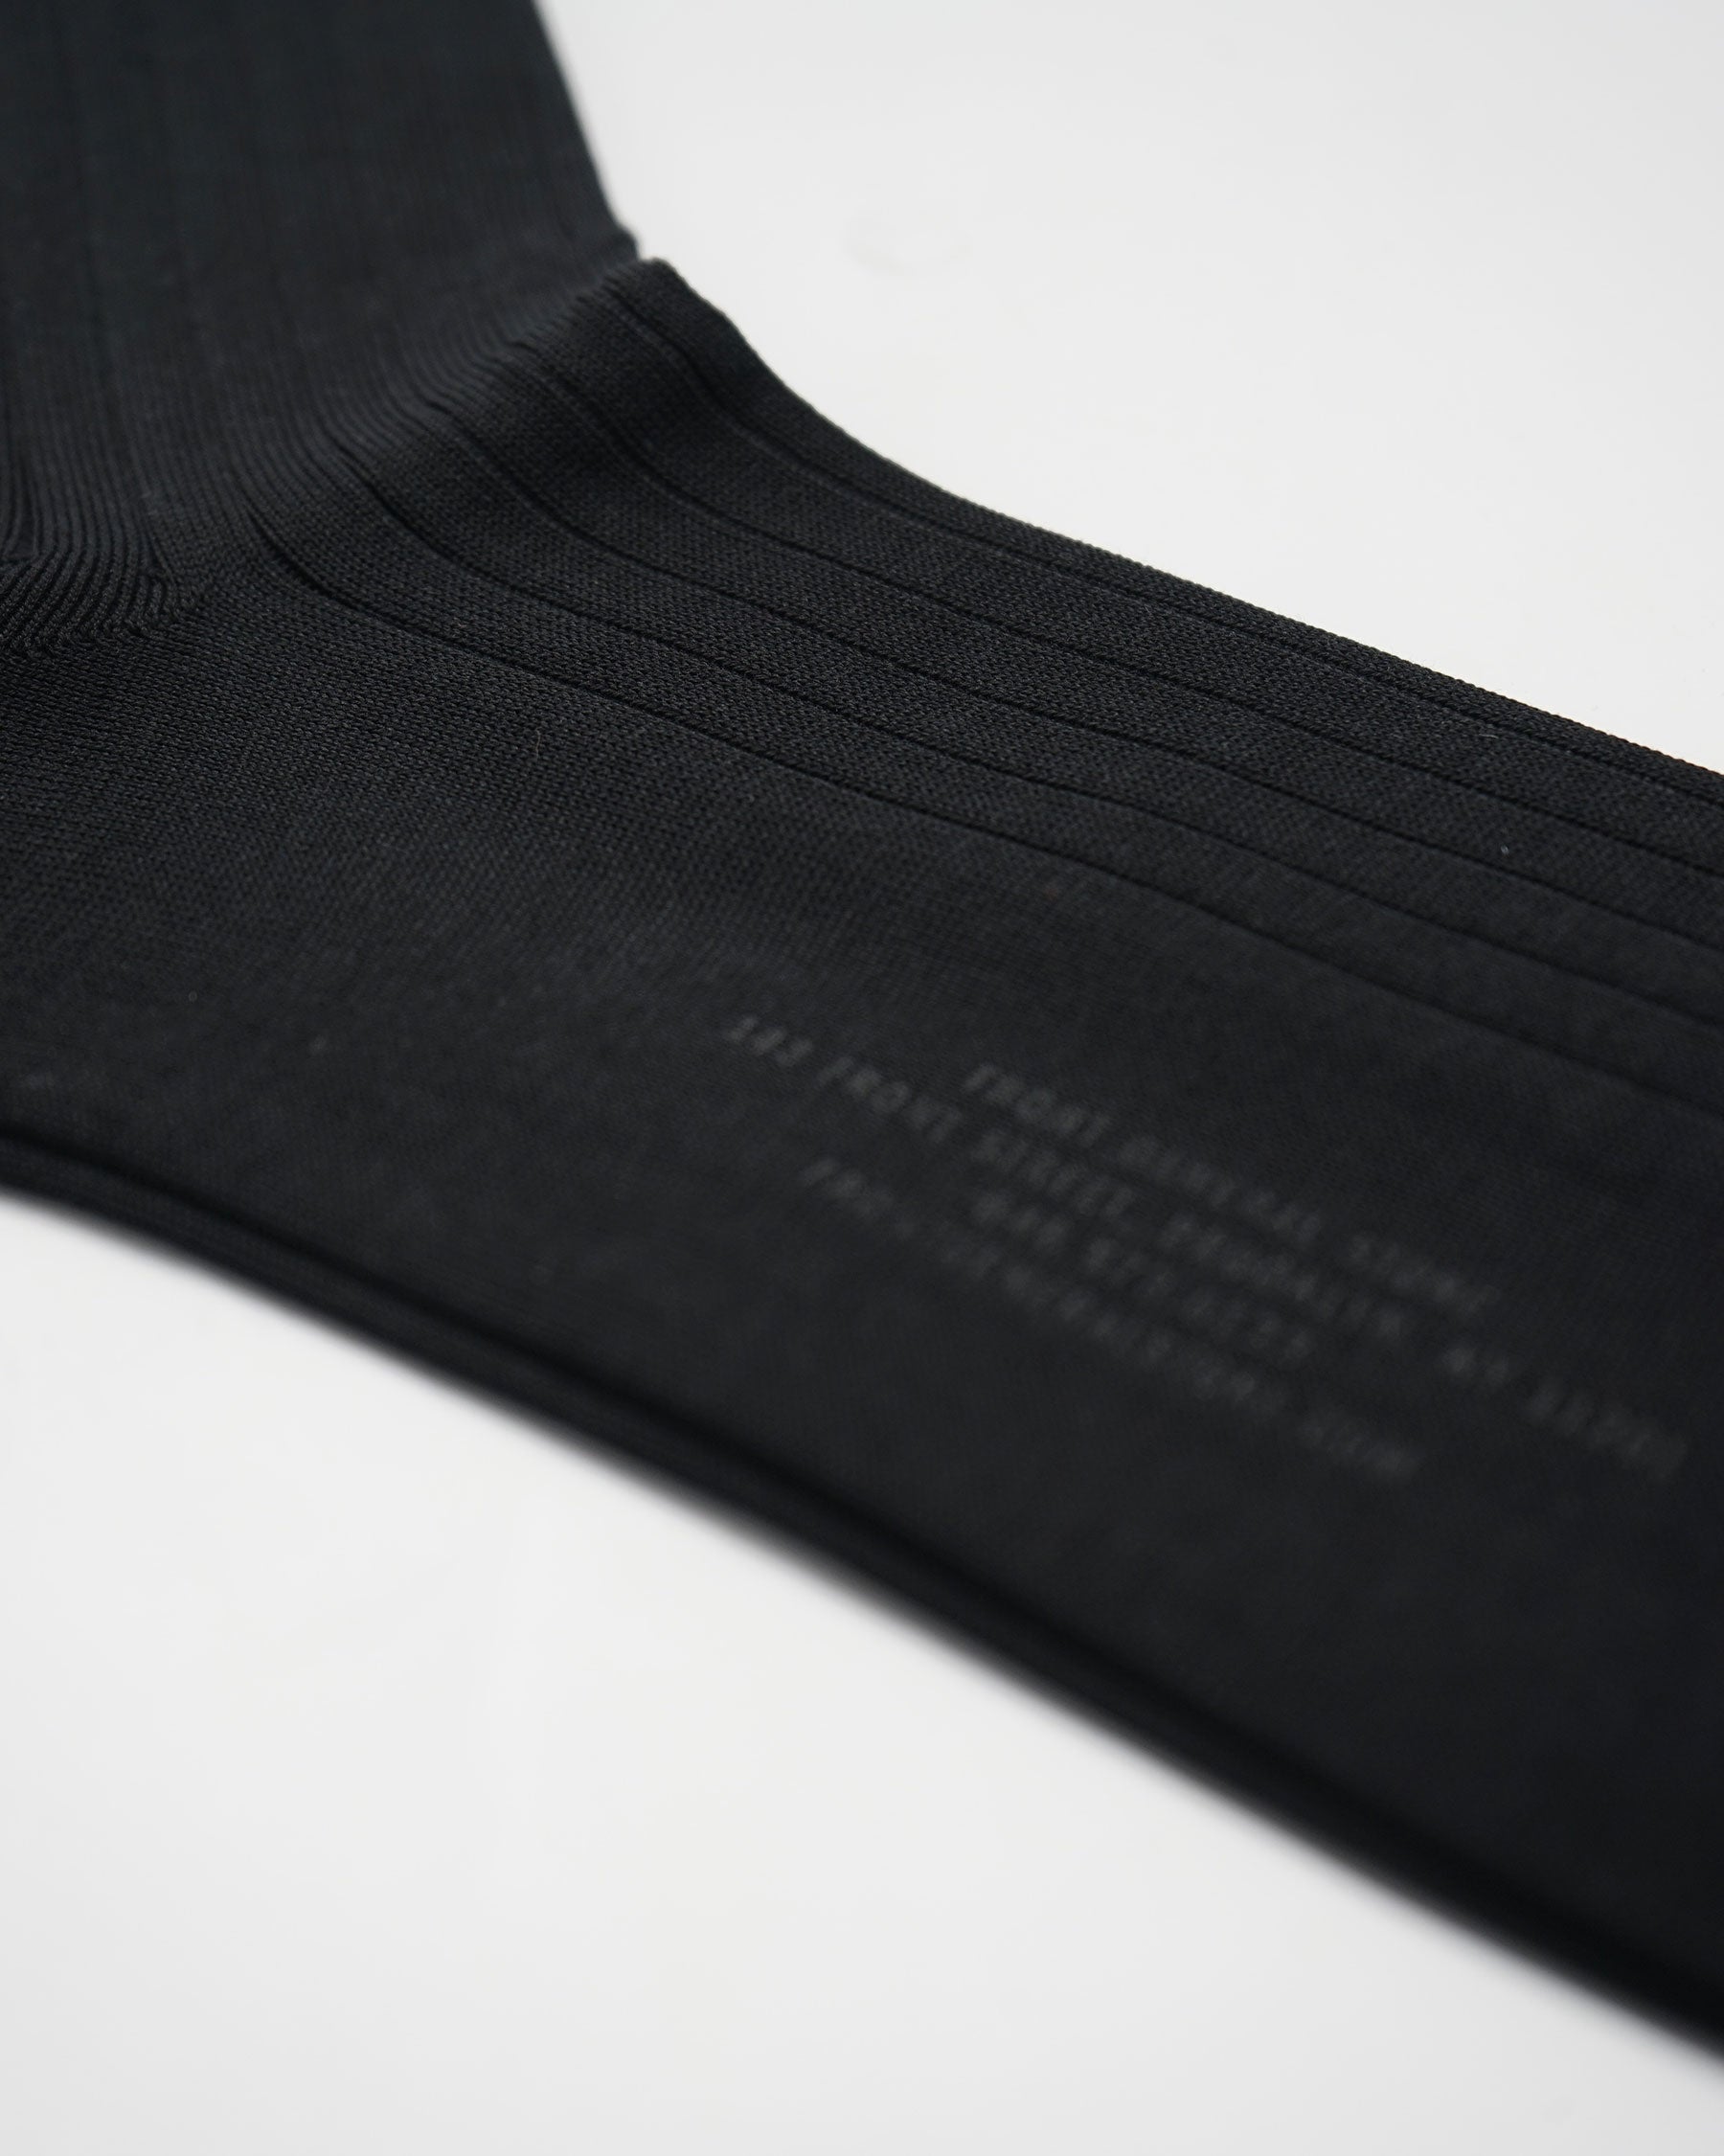 Dress Socks / Black